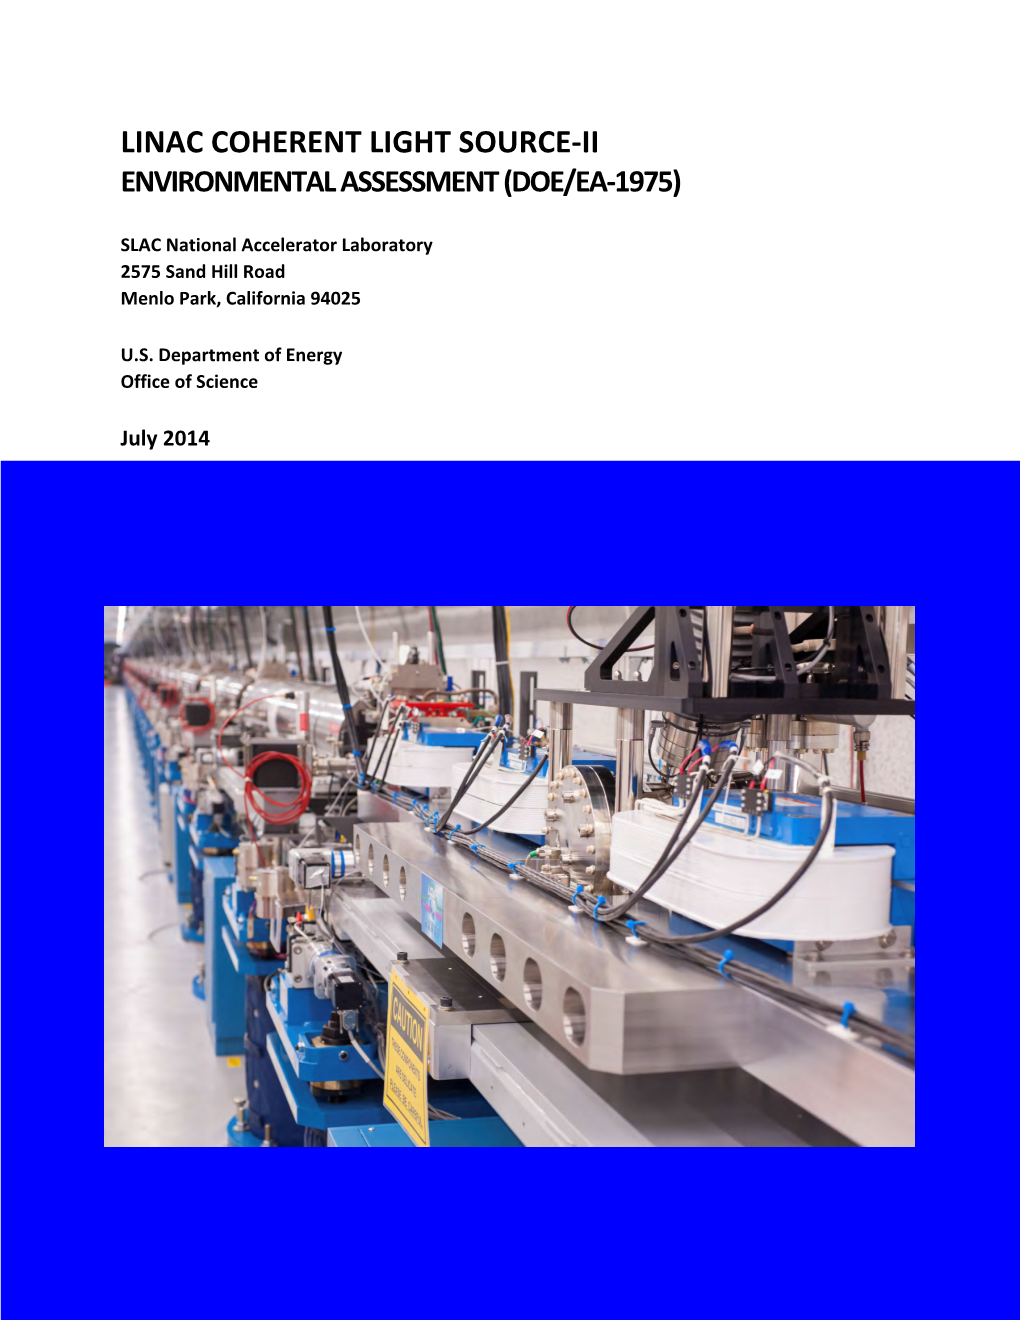 LINAC Coherent Light Source-II Environmental Assessment (DOE